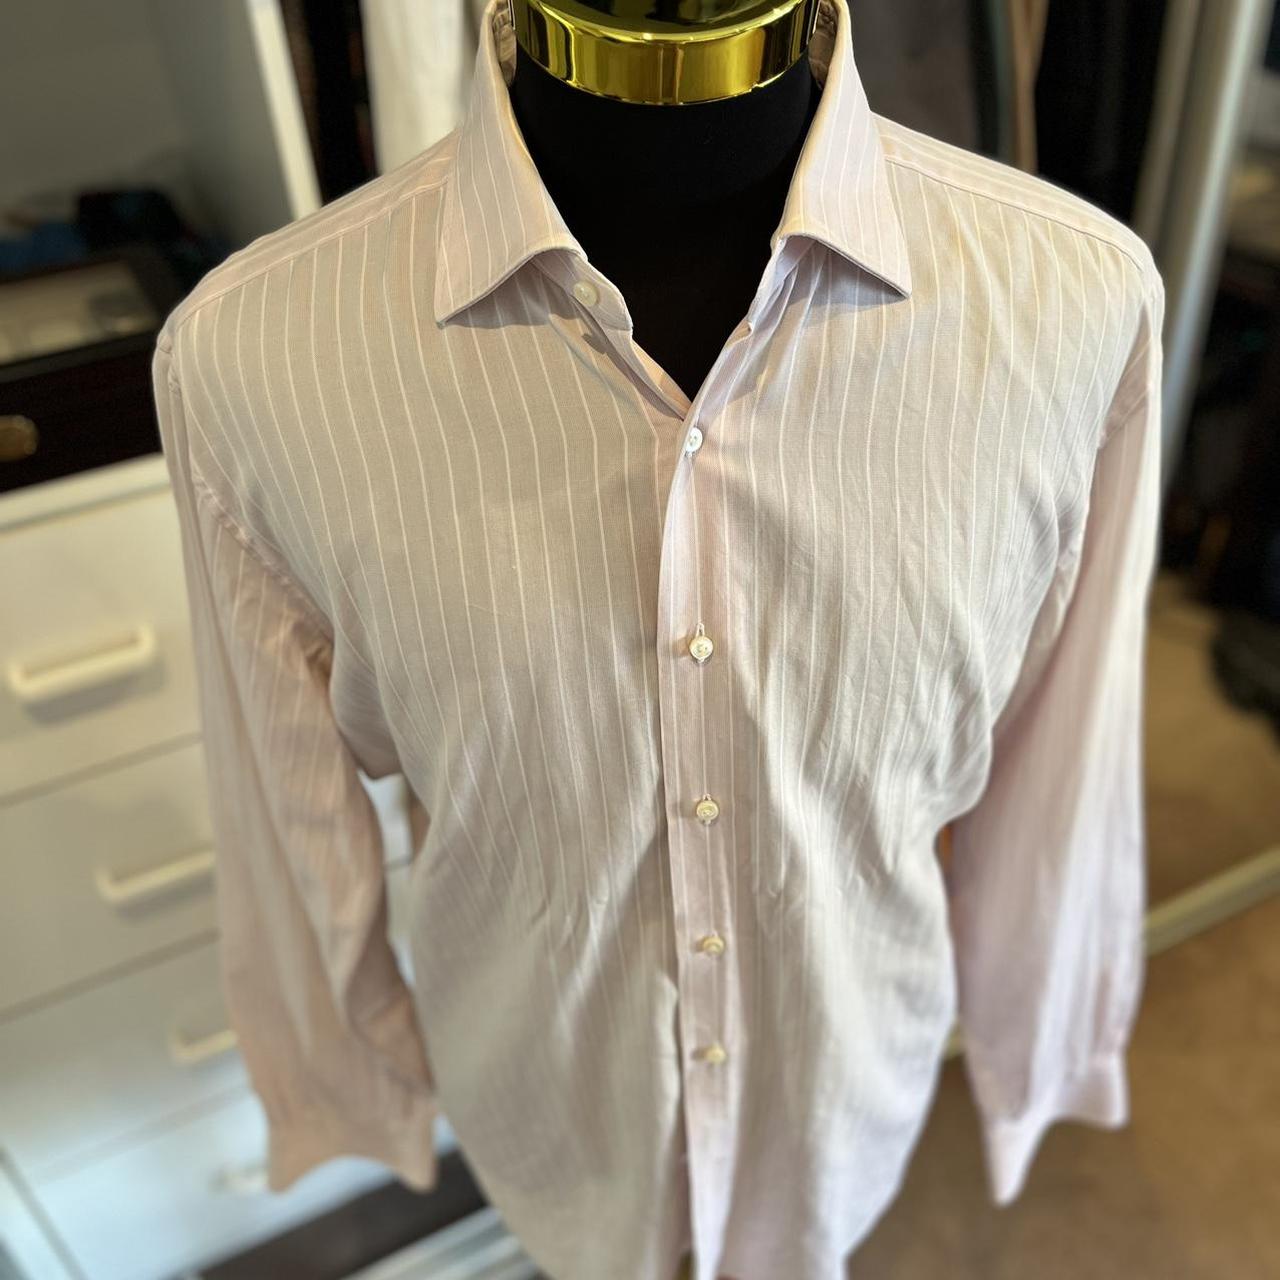 Ermenegildo Zegna 100% Cotton Pink White Stripe Business Shirt Size XL 44/17.5 French Cuff Made in Switzerland